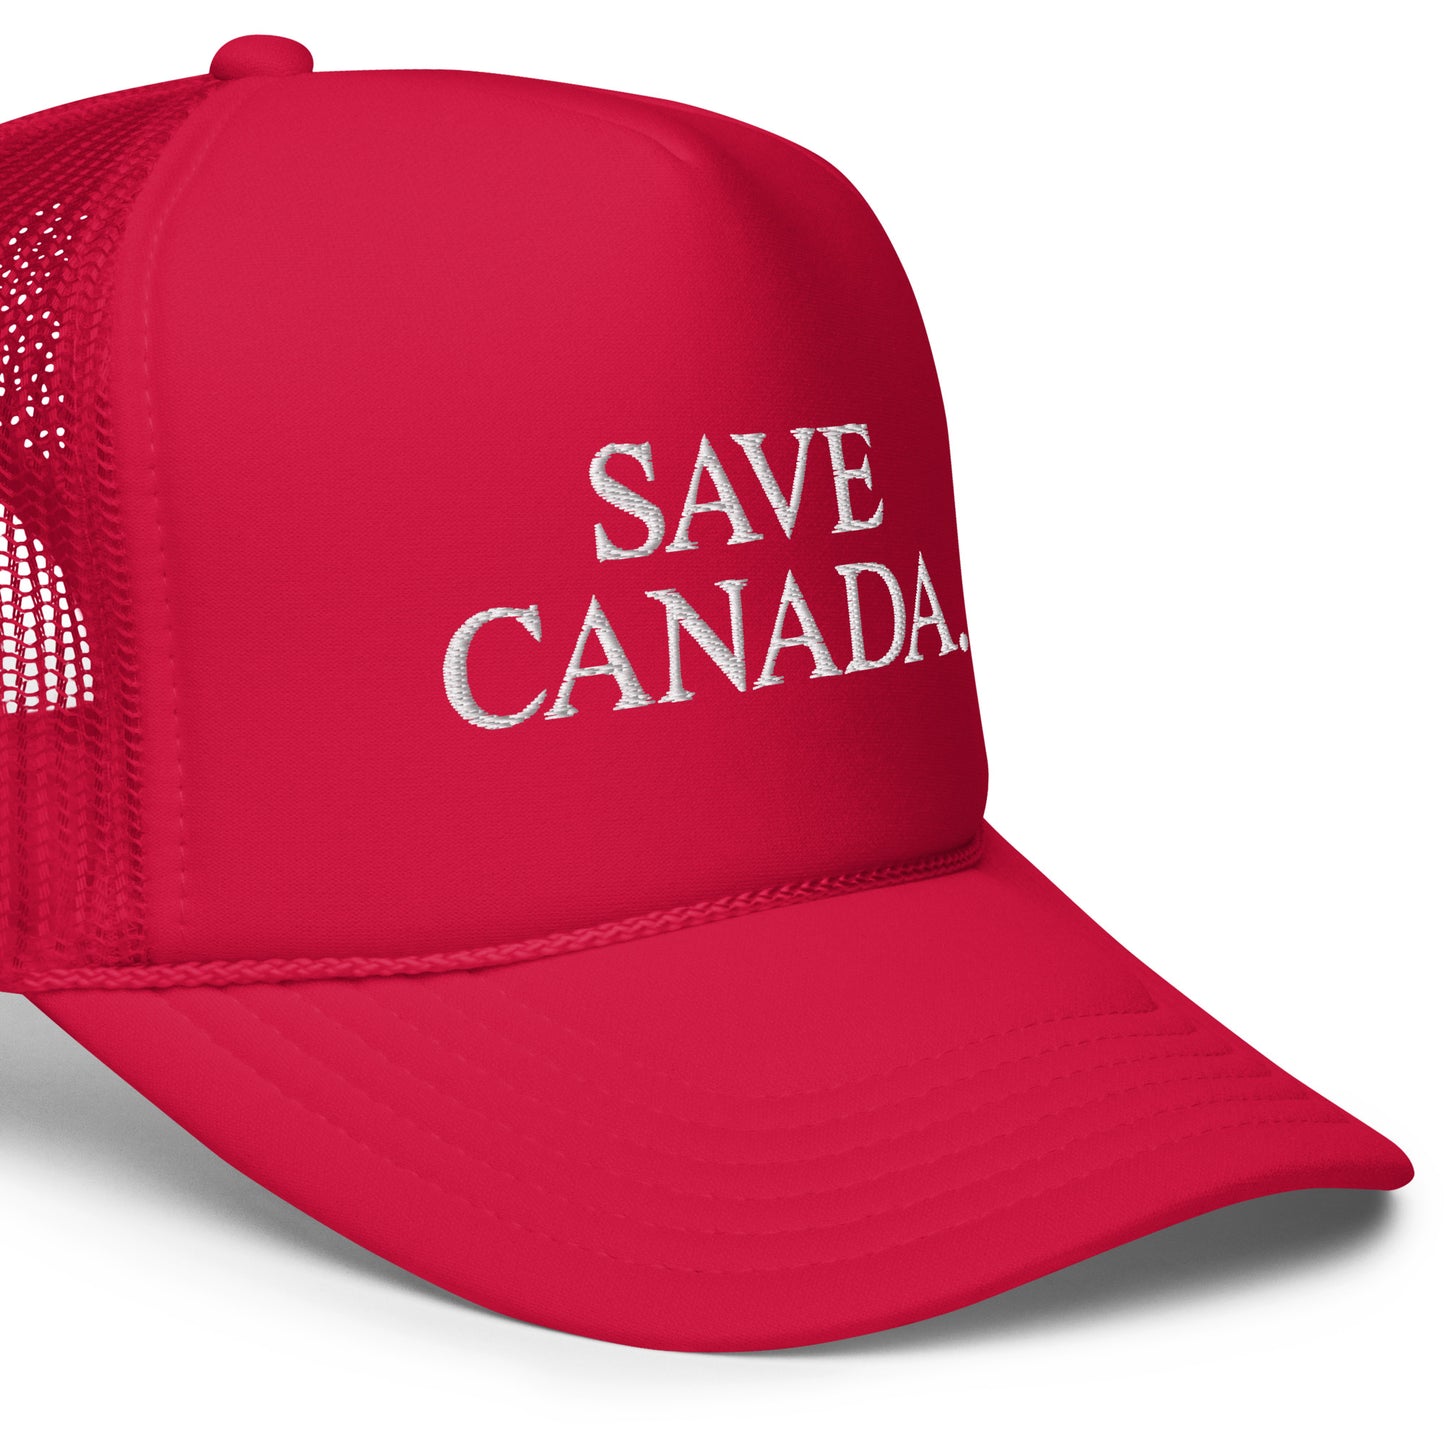 SAVE CANADA: Foam trucker hat